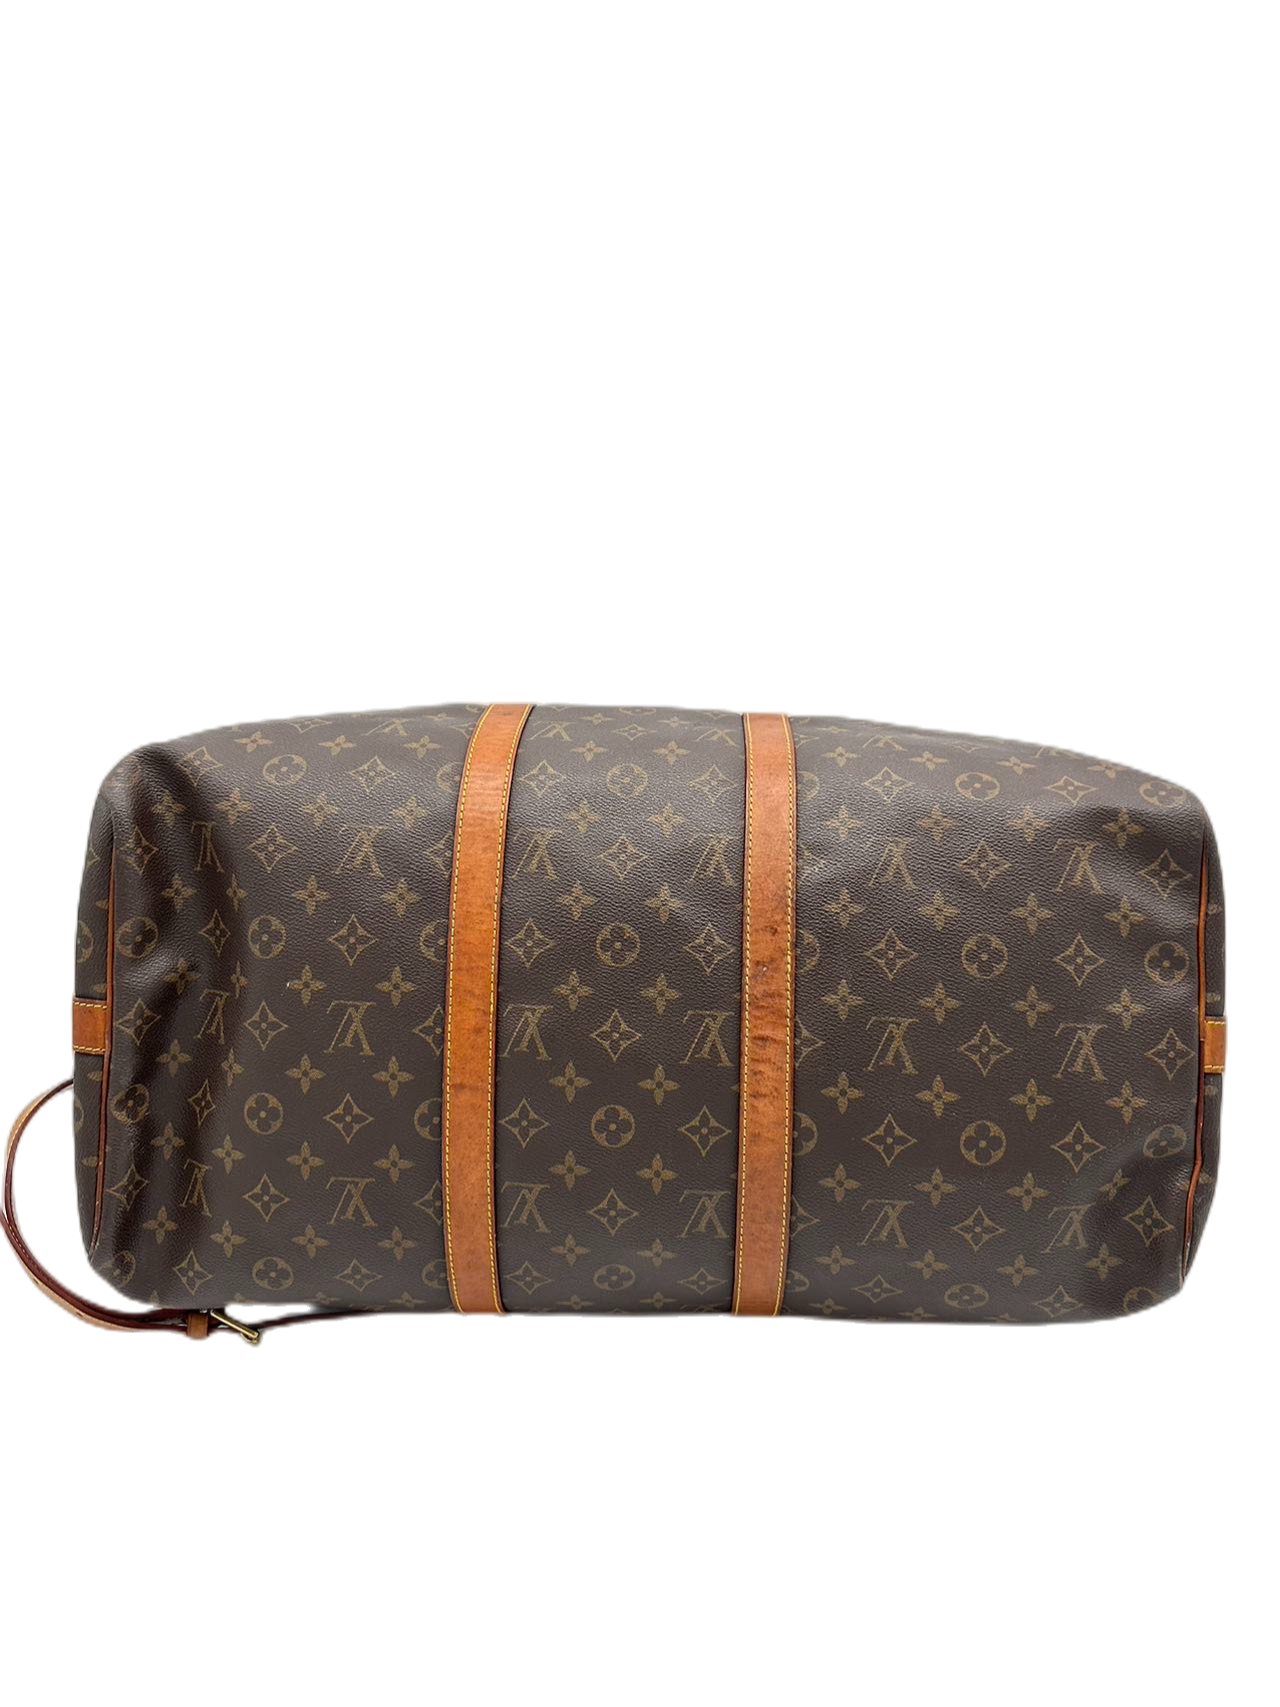 Preloved Louis Vuitton Monogram Keepall Bandouilere 50 Travel Bag